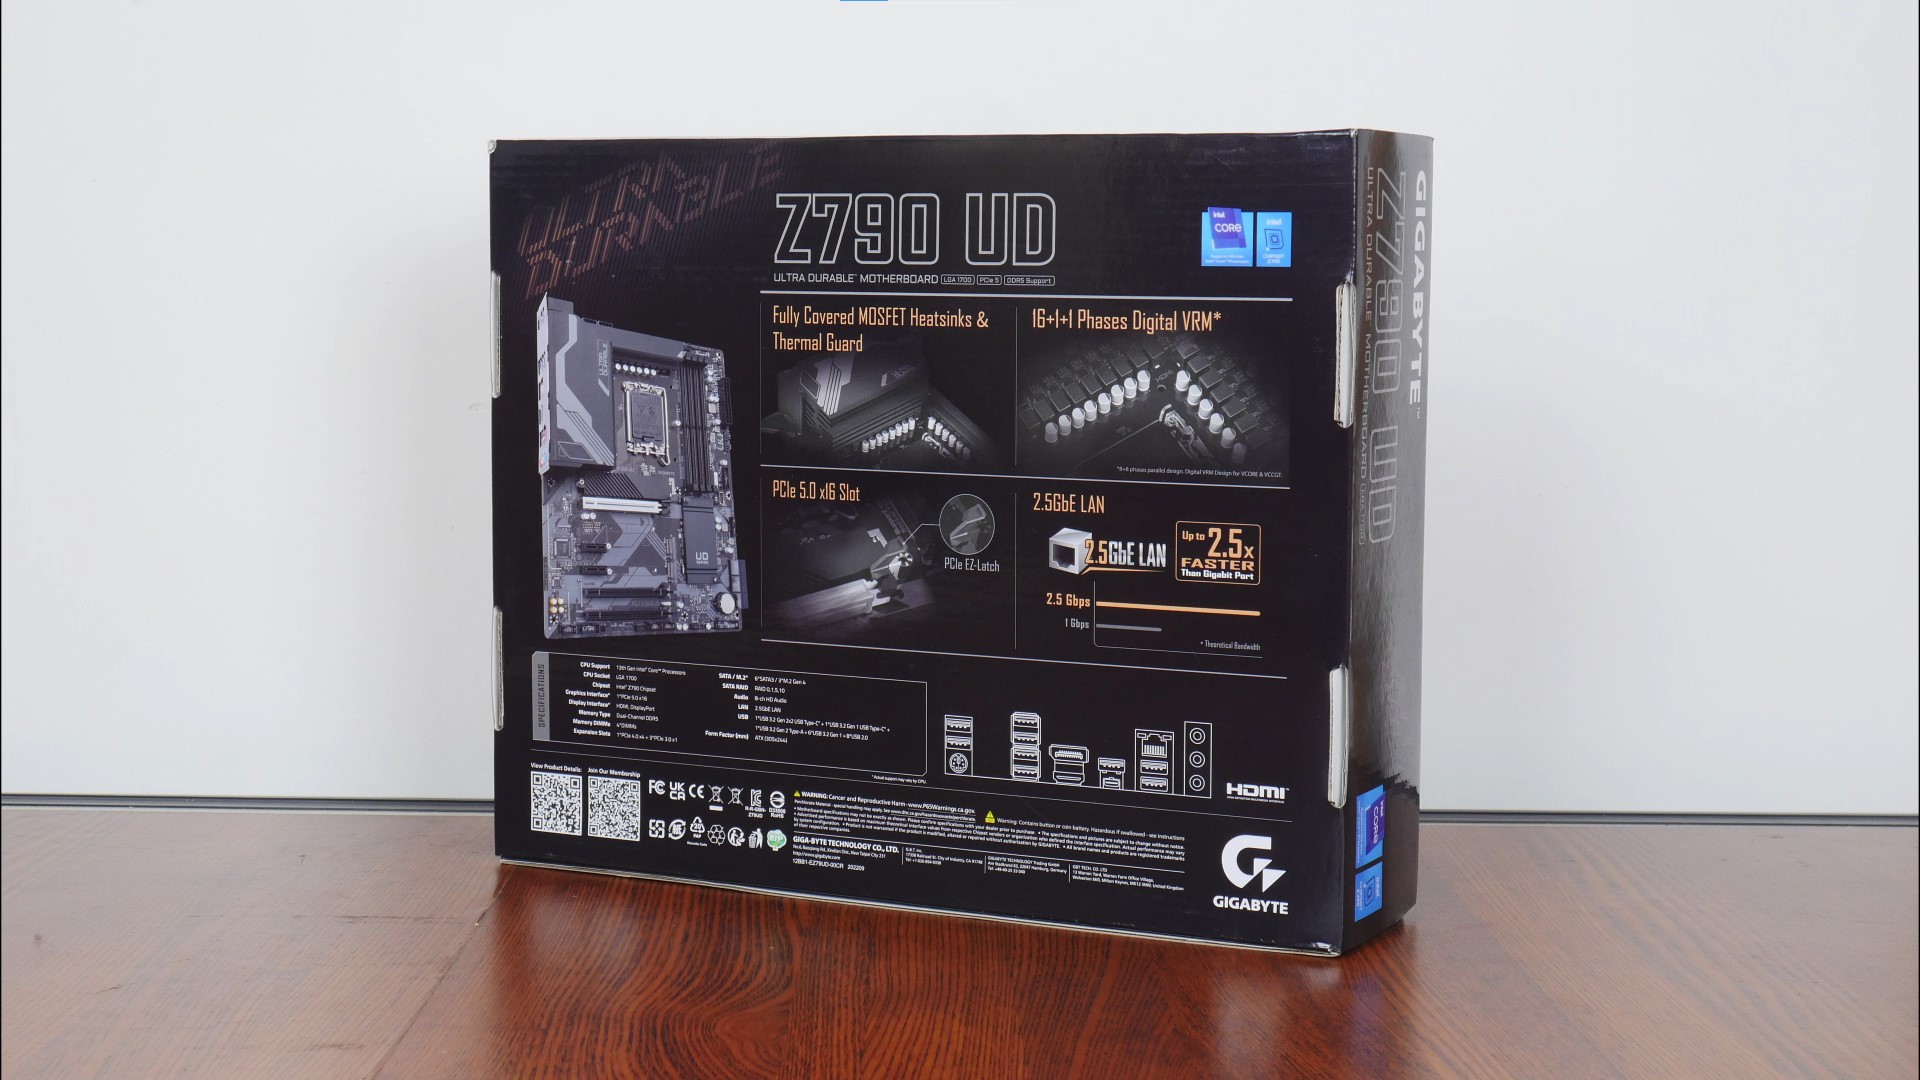 Gigabyte Z790 UD Packaging (Rear)